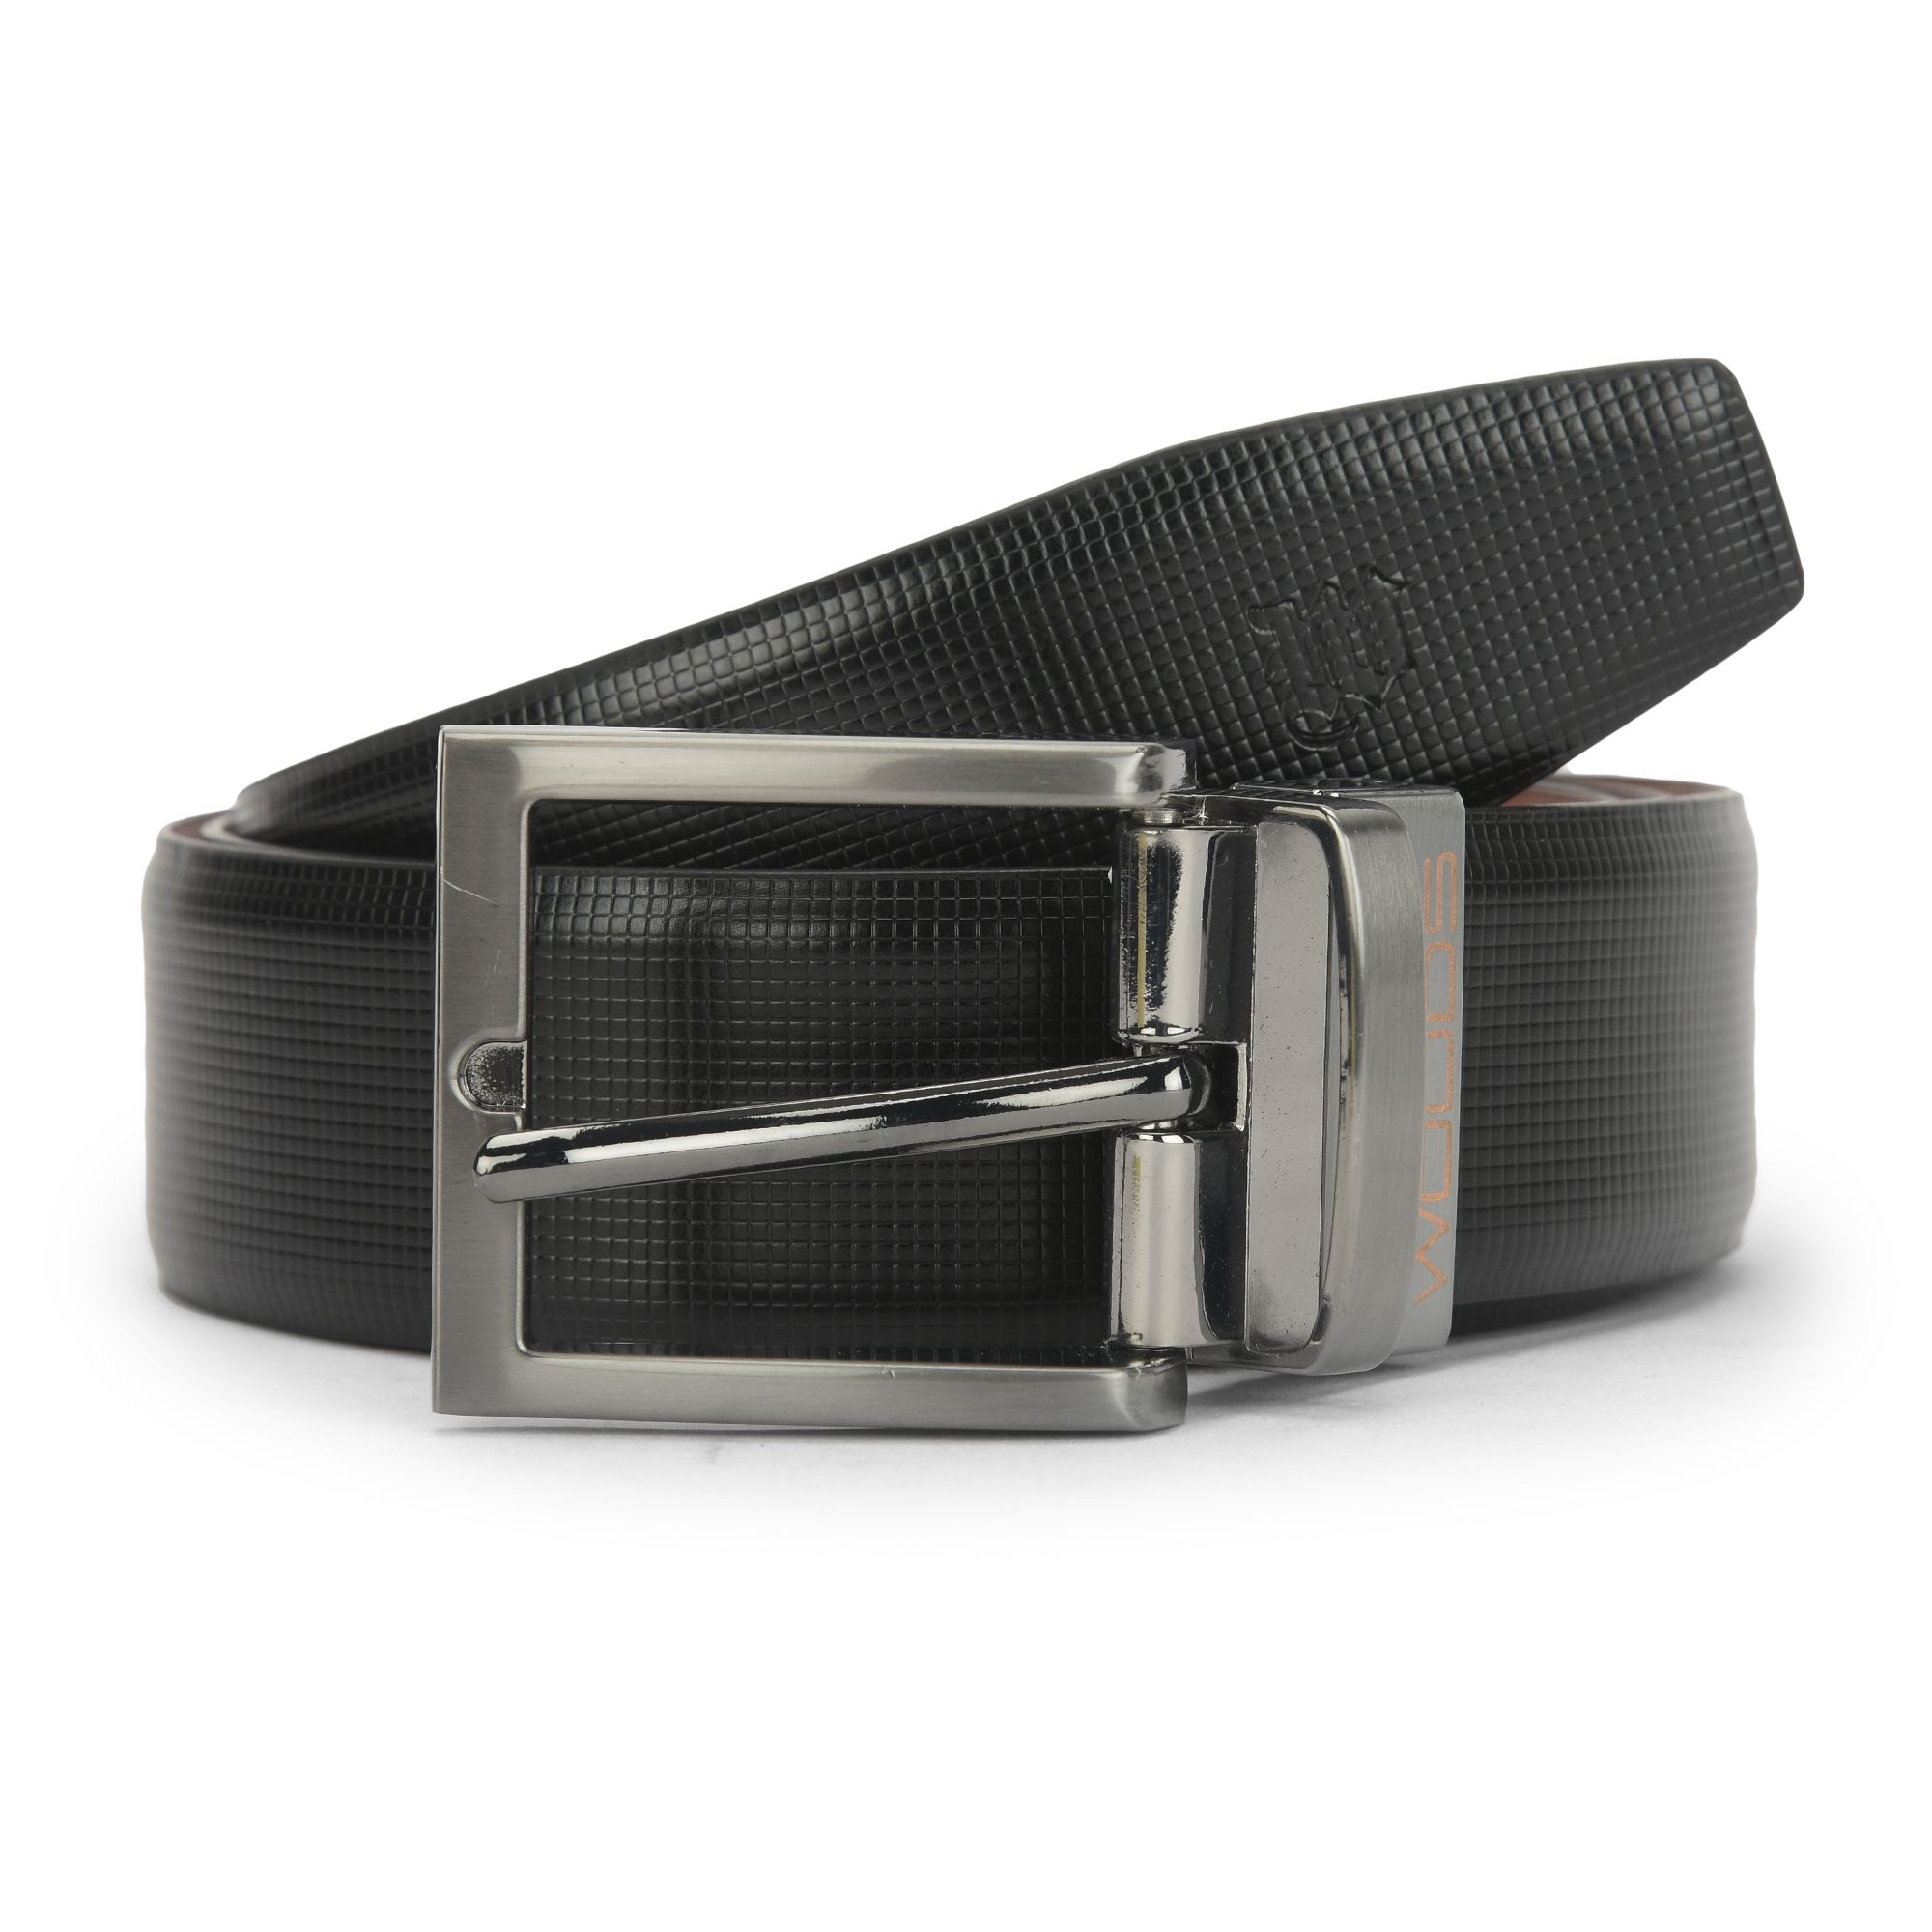 Black/Tan reversible leather belt